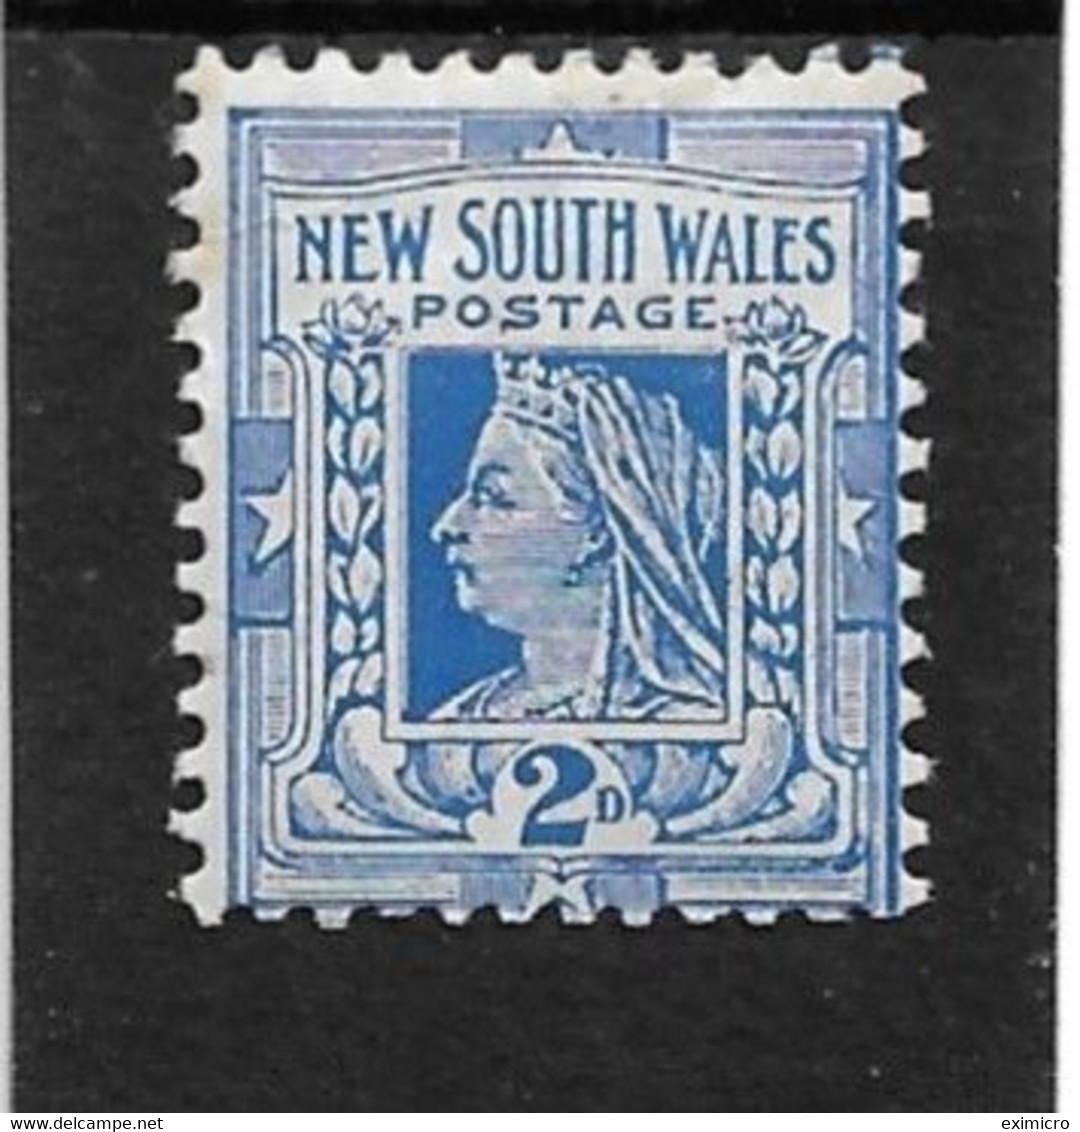 AUSTRALIA NEW SOUTH WALES 1905 2½d DEEP ULTRAMARINE SG 335 PERF 12 X 11½ MOUNTED MINT - Nuevos